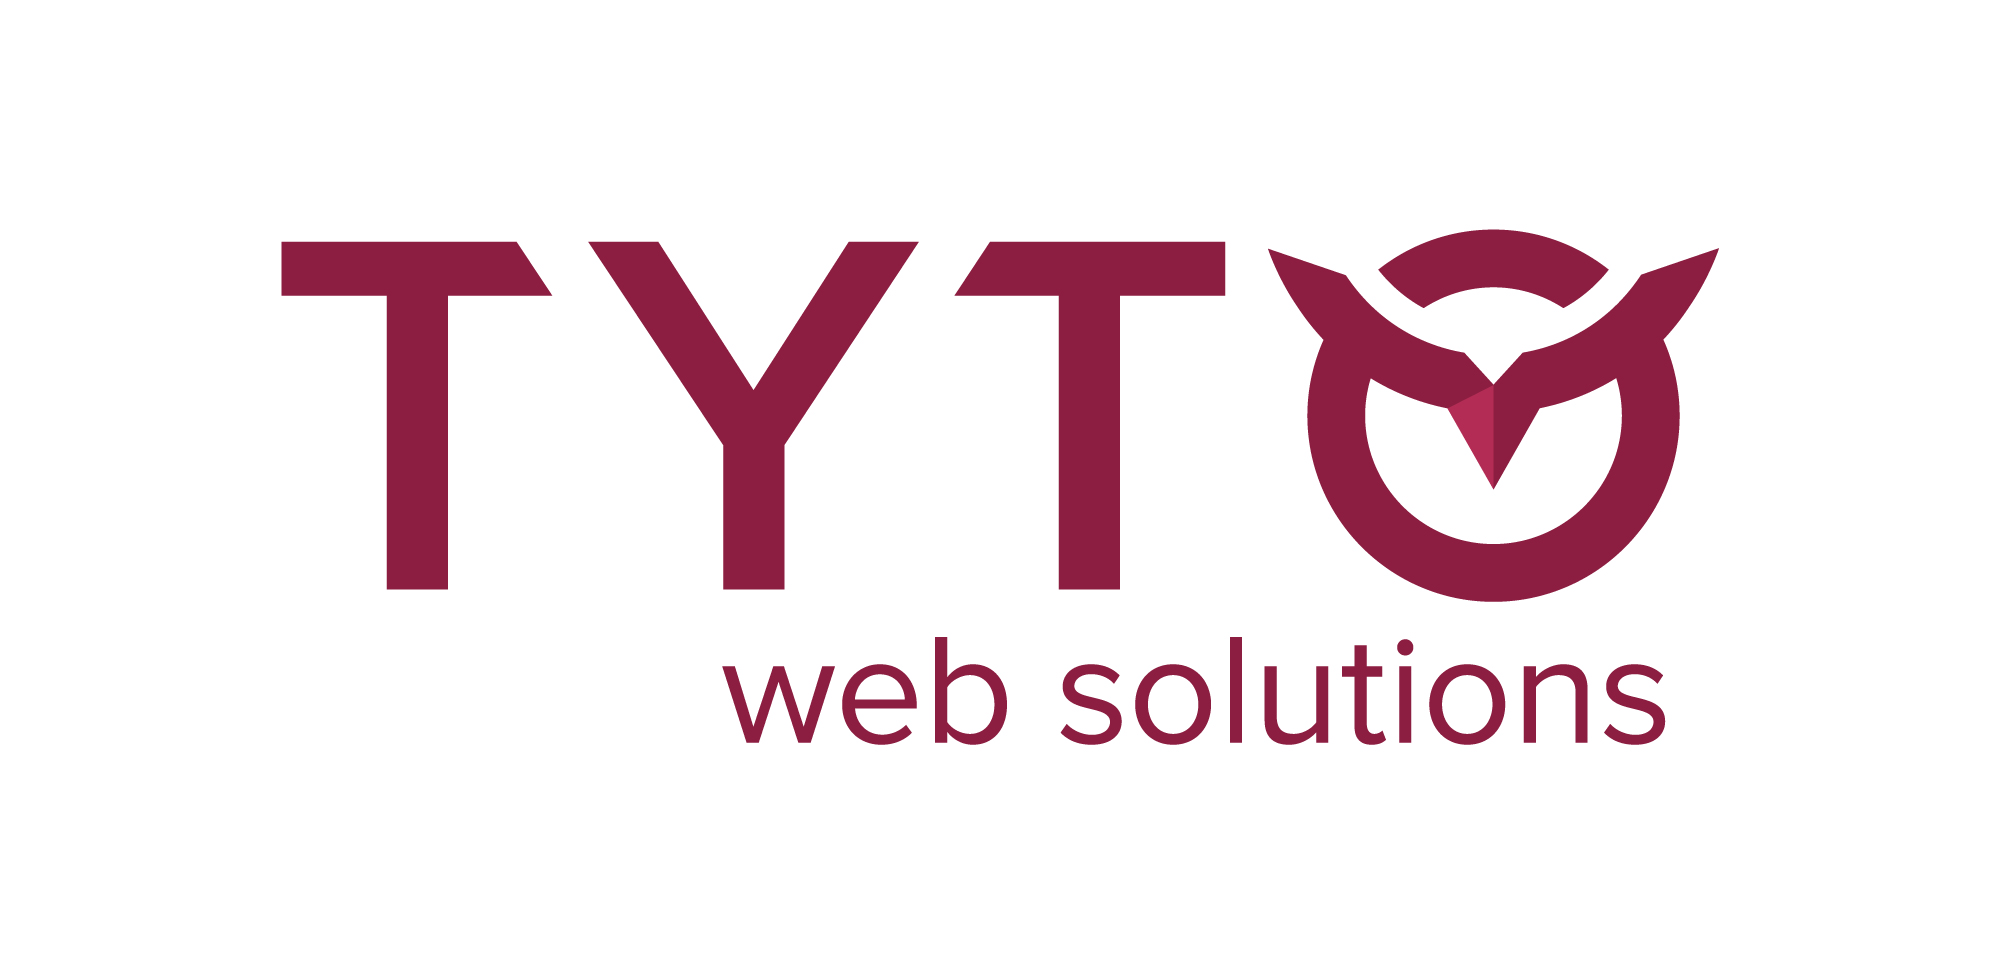 Tyto Web Solutions